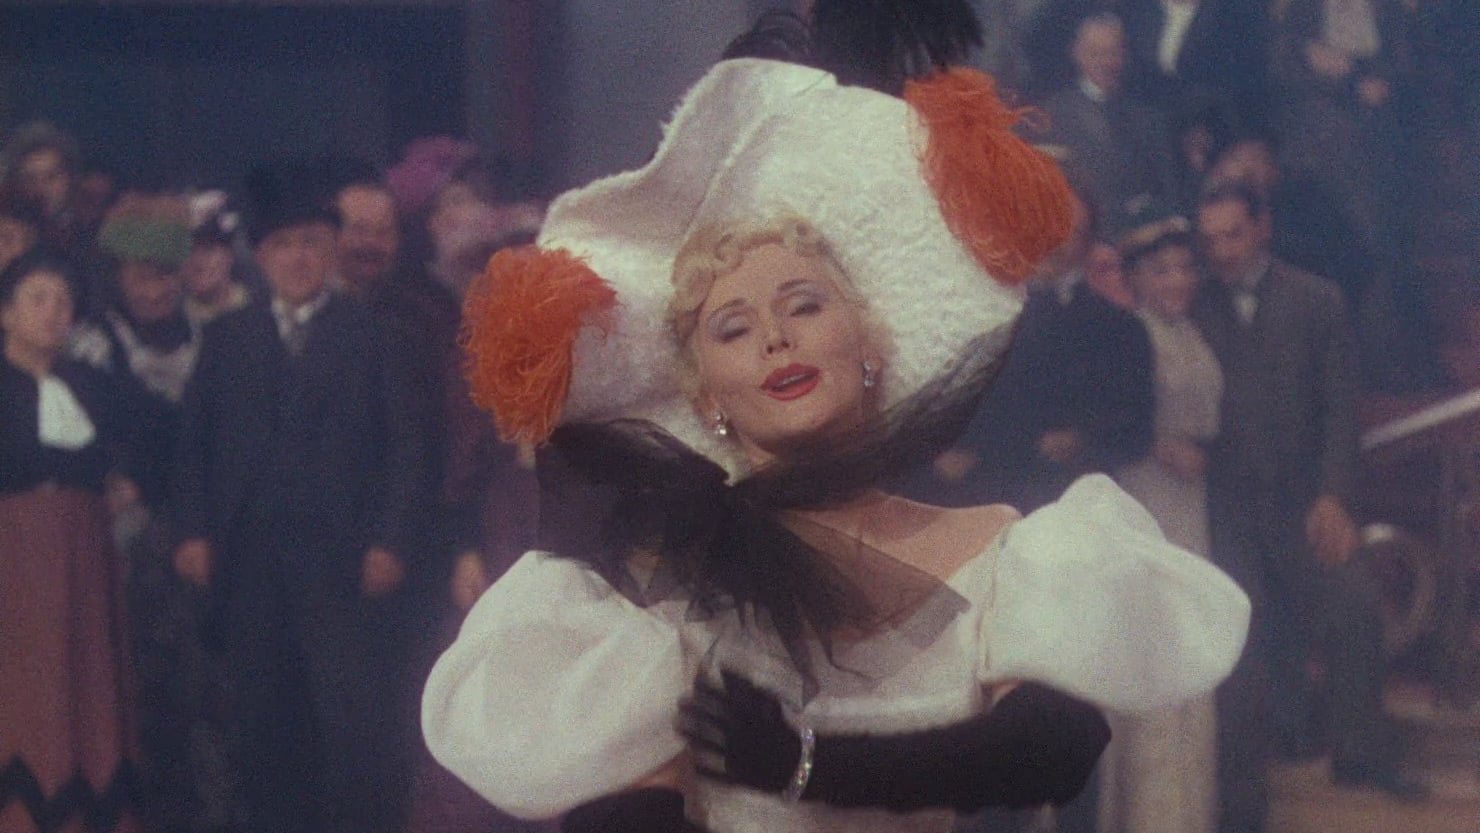 دانلود فیلم Moulin Rouge 1952